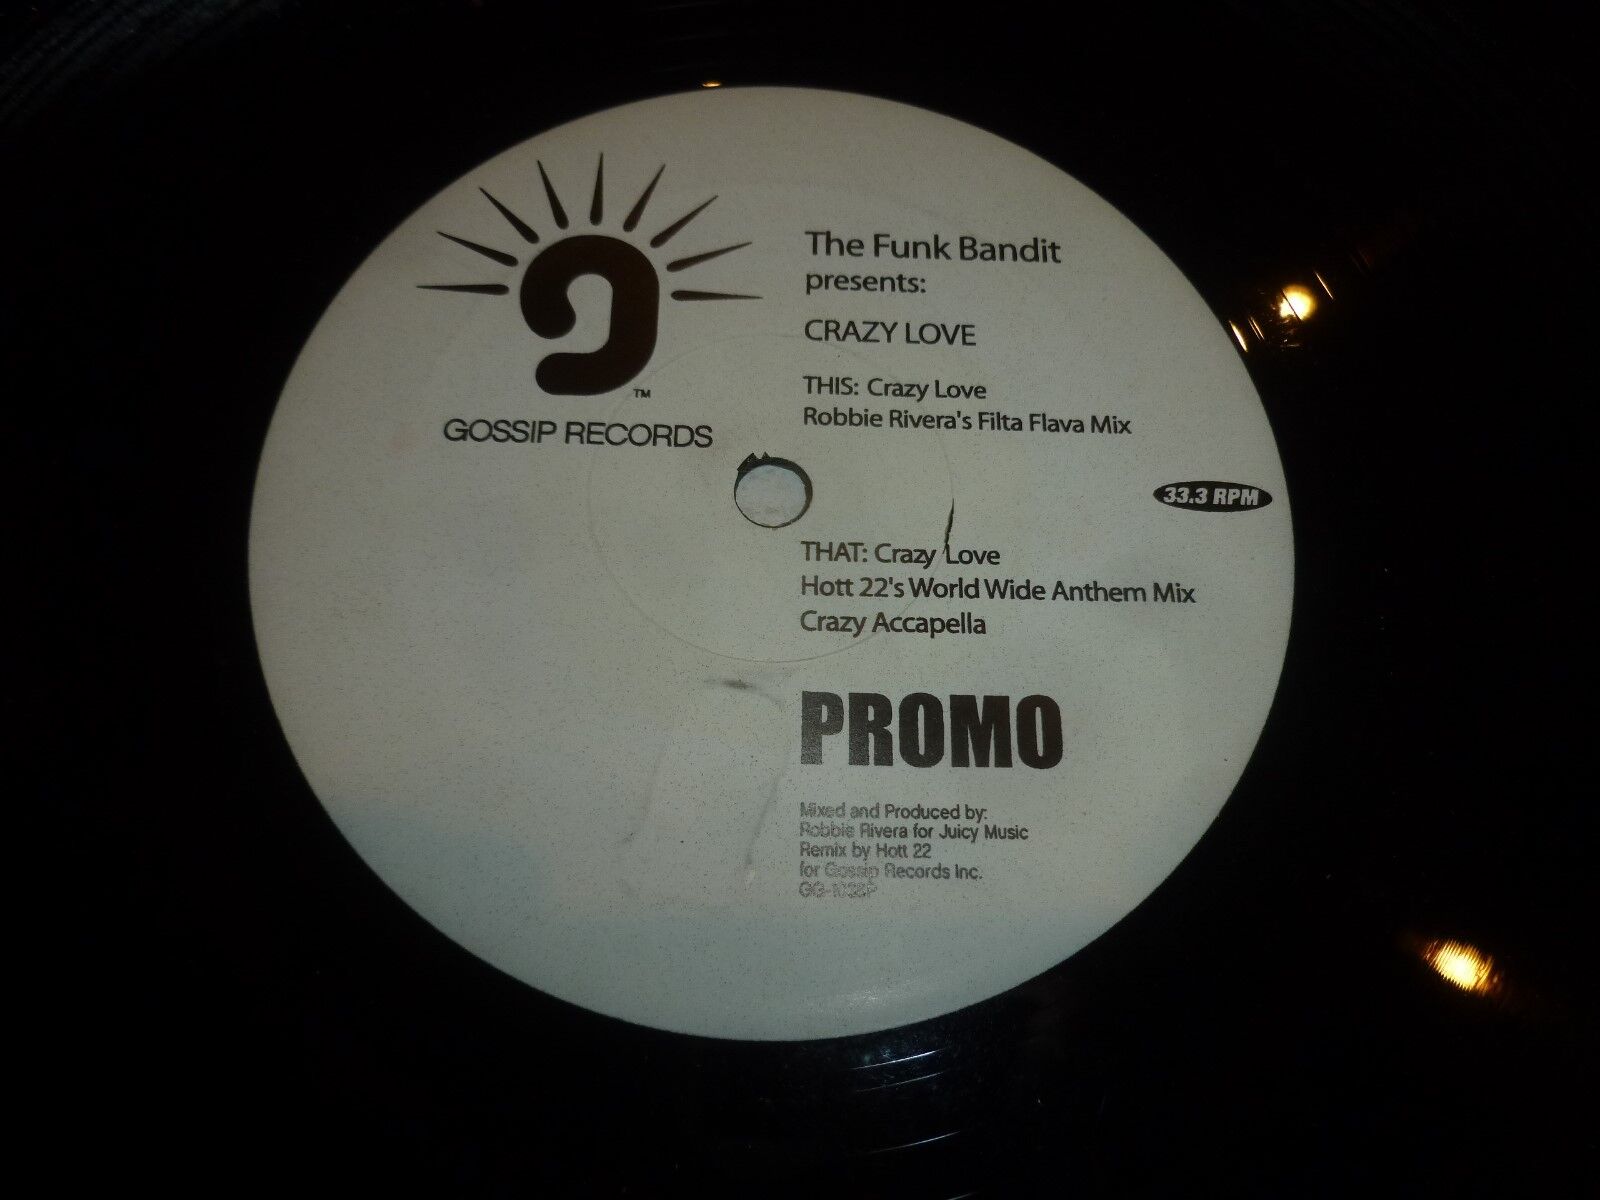 THE FUNK BANDIT presents CRAZY LOVE - USA 3-track 12" Vinyl Single - DJ PROMO